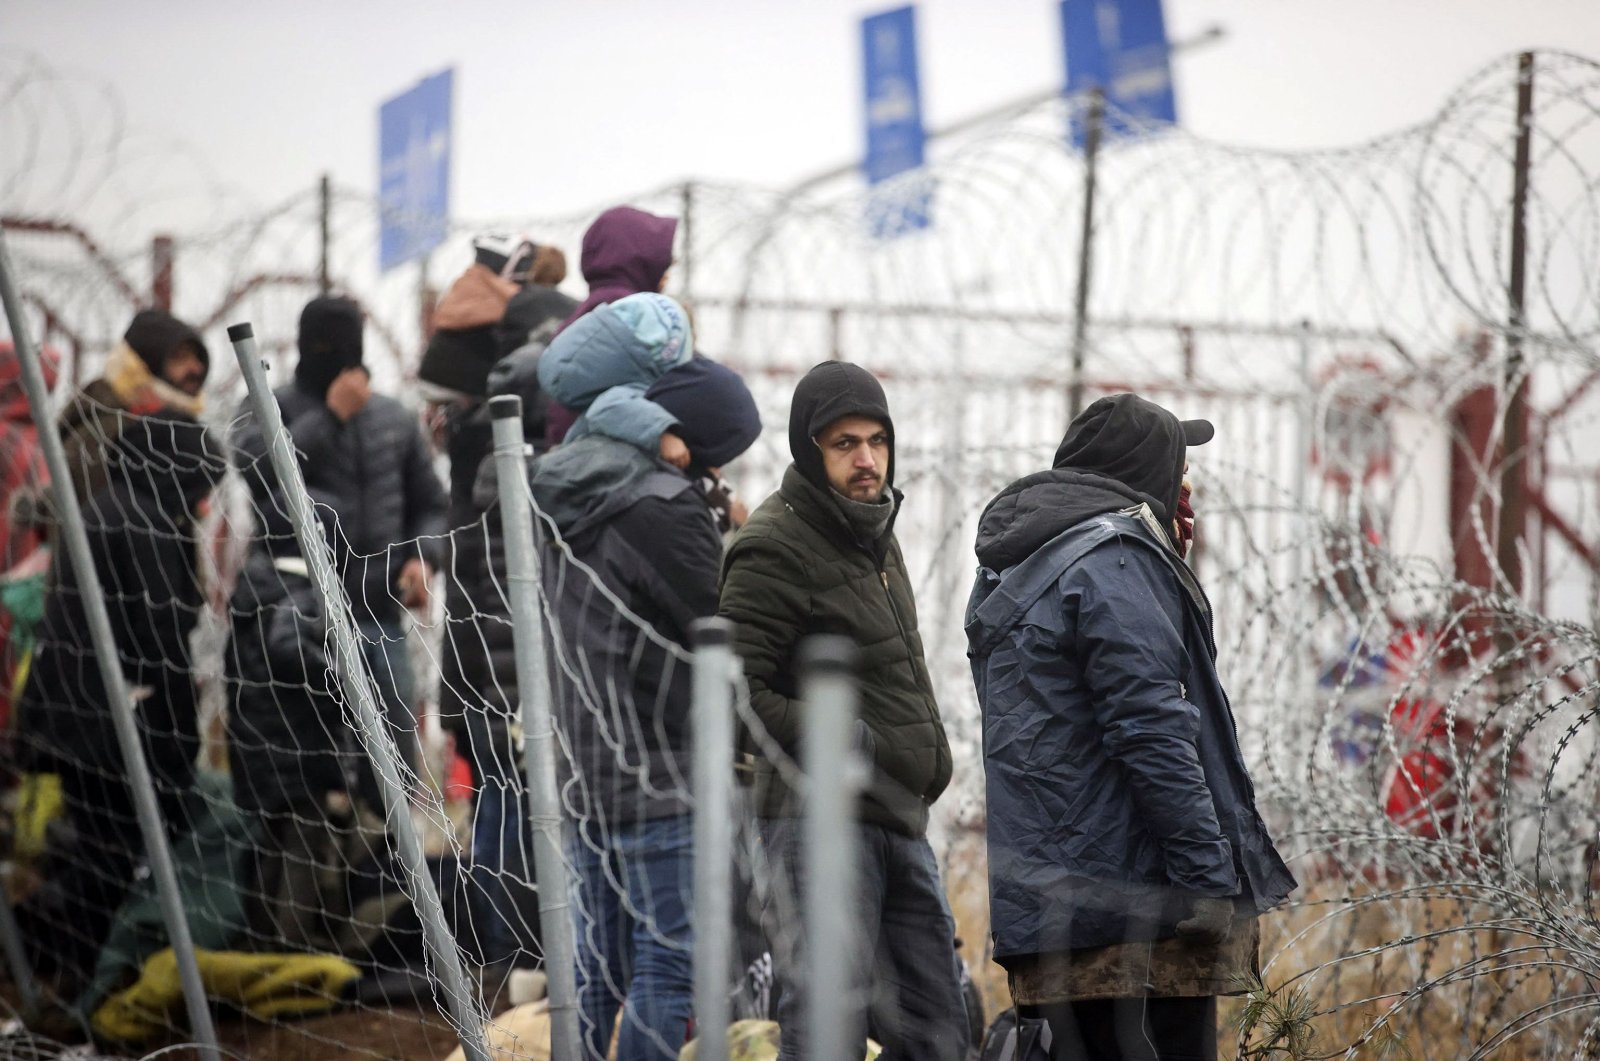 A group of migrants is seen near the Belarusian-Polish border in the Grodno region, Belarus, Nov. 13, 2021. (Leonid Shcheglov / BELTA via AFP)